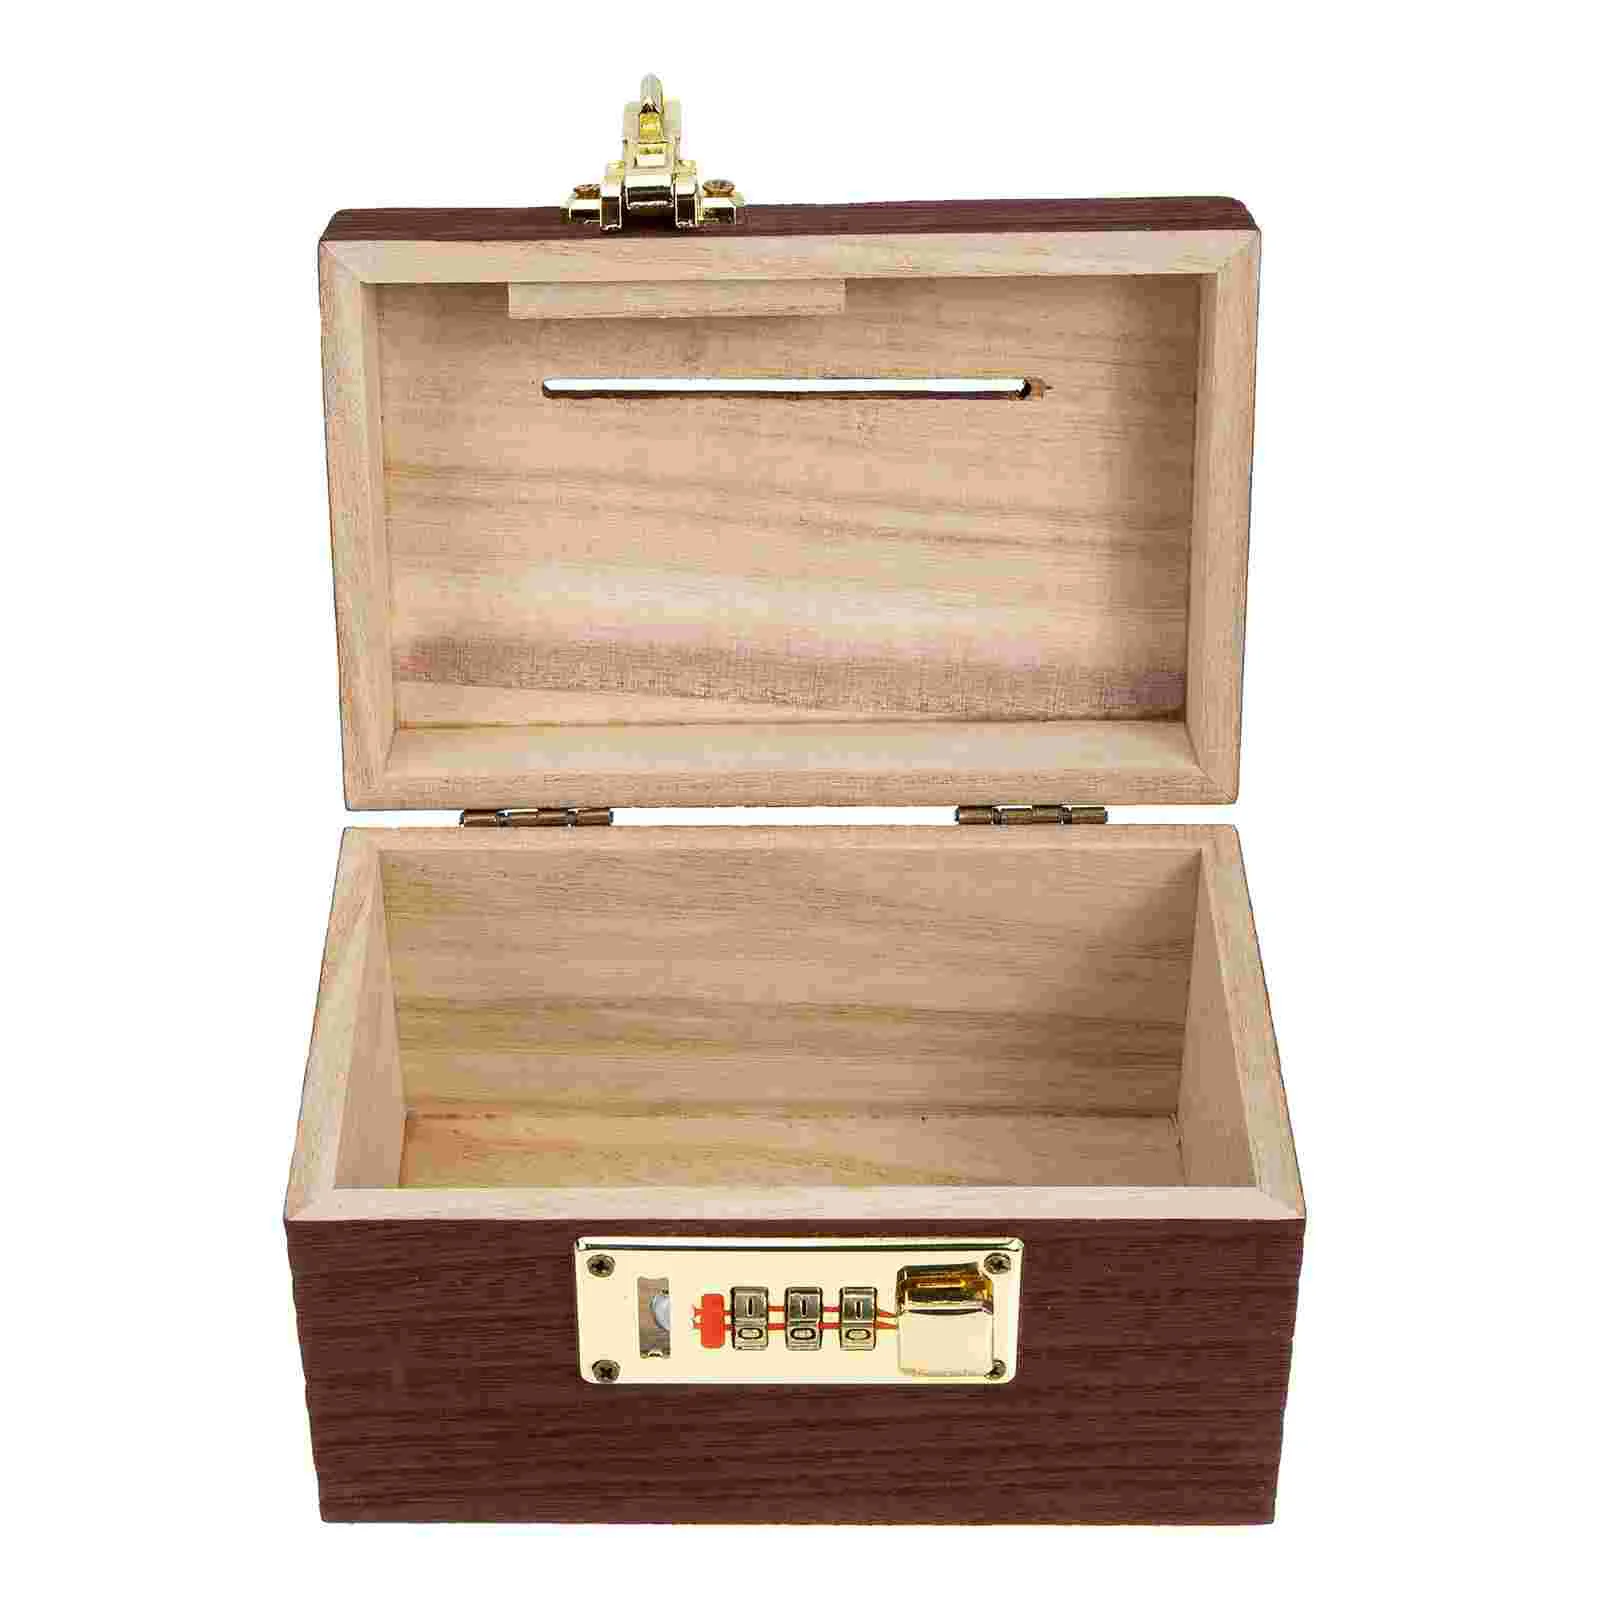 Box Treasure Chest Pirate Wooden Jewelry Wood Lock With Cash Keepsake Case Trinket Vintagemoney Candy Kids Gift Coin